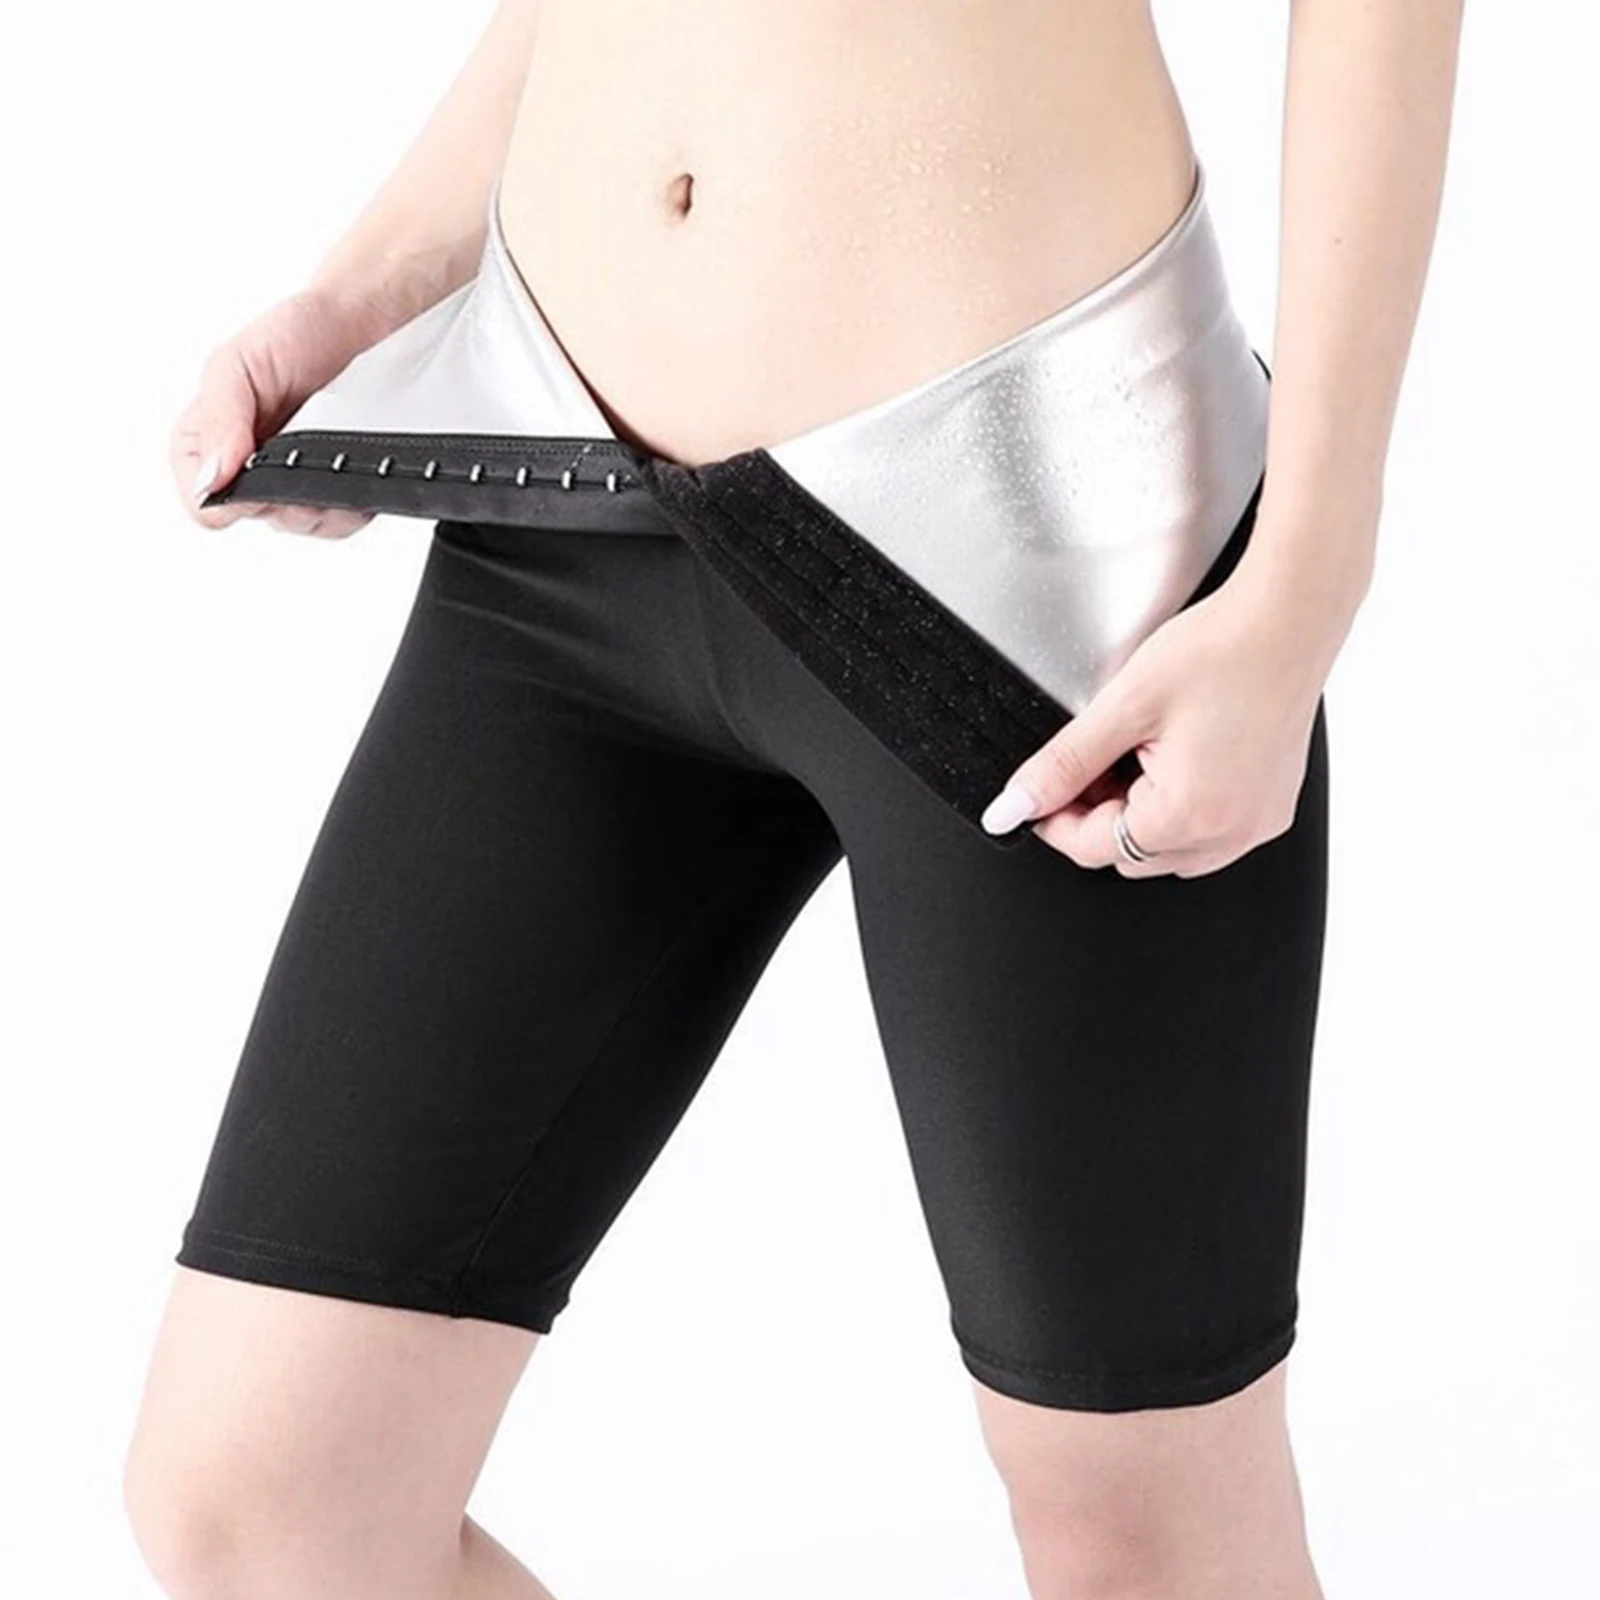 backless shapewear Sweat Pants Workout Fitness Slimming Sauna Shorts Sports Capris Body Shaper spanx underwear